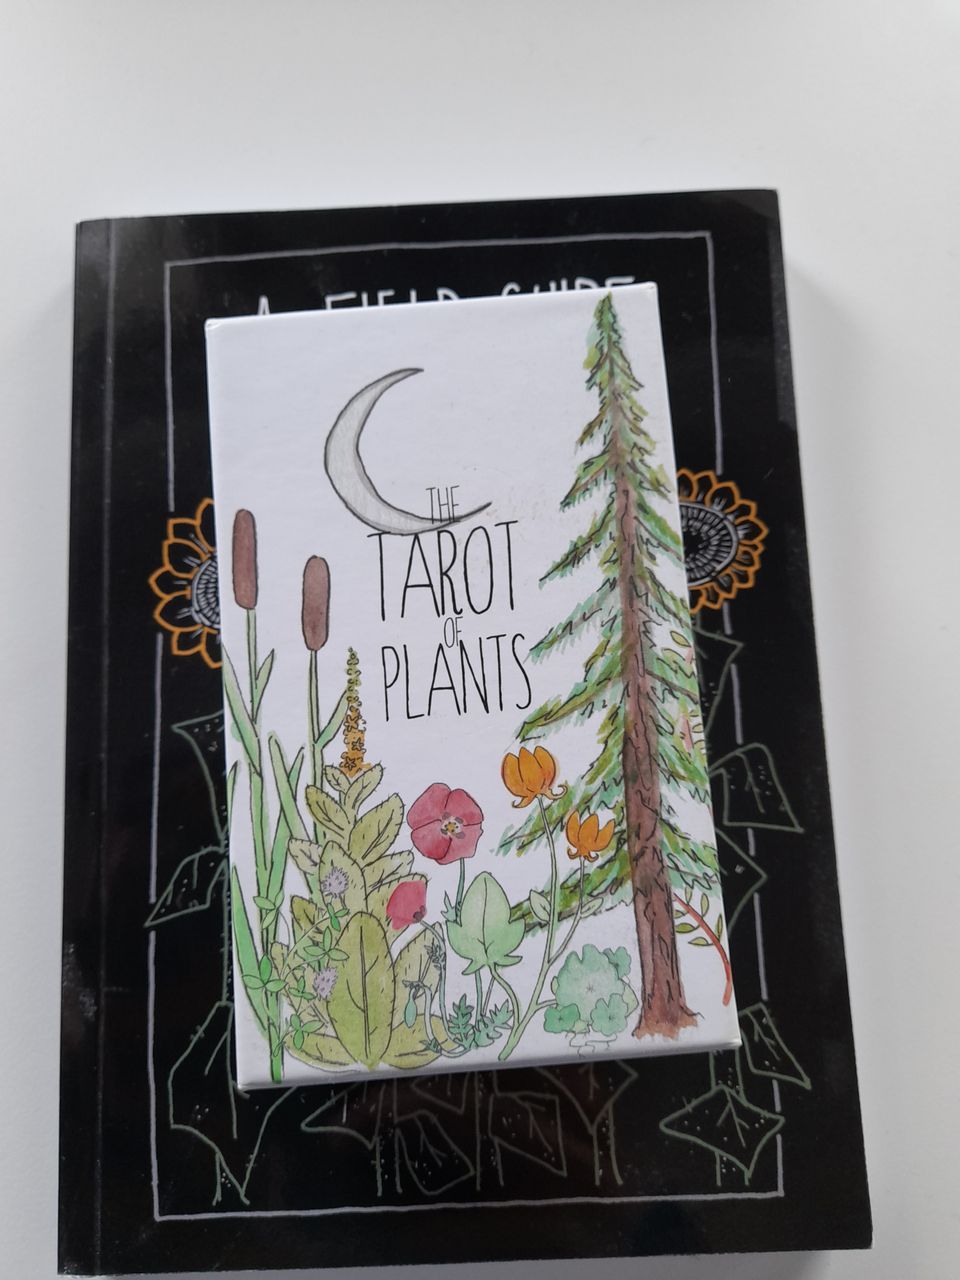 The Tarot of Plants kortit + field guide